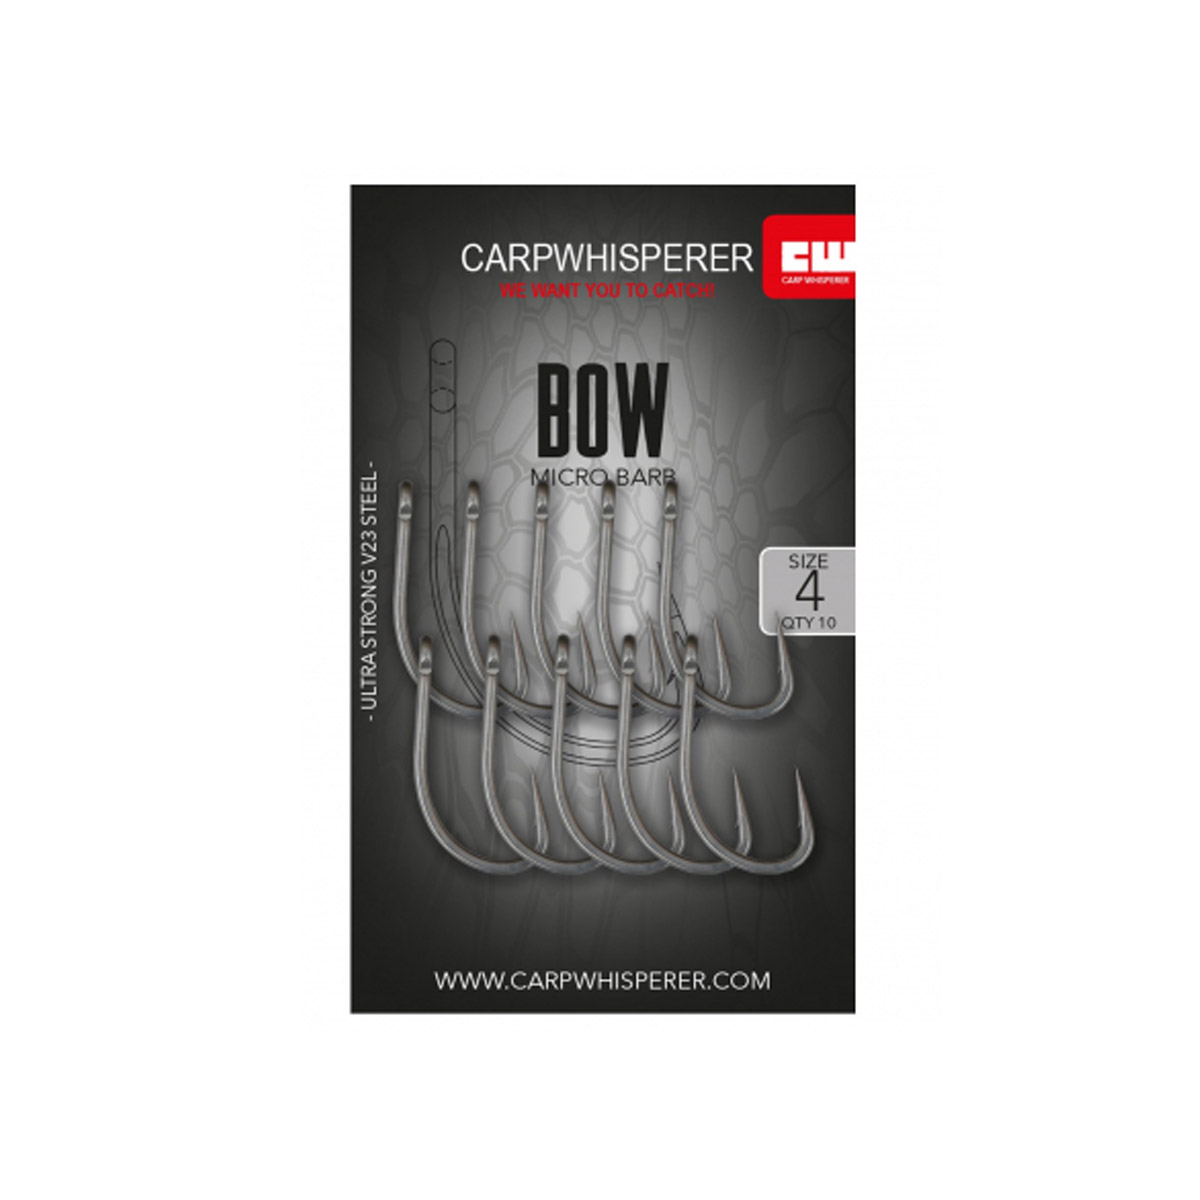 Carp Whisperer - Bow haken - Micro Barb